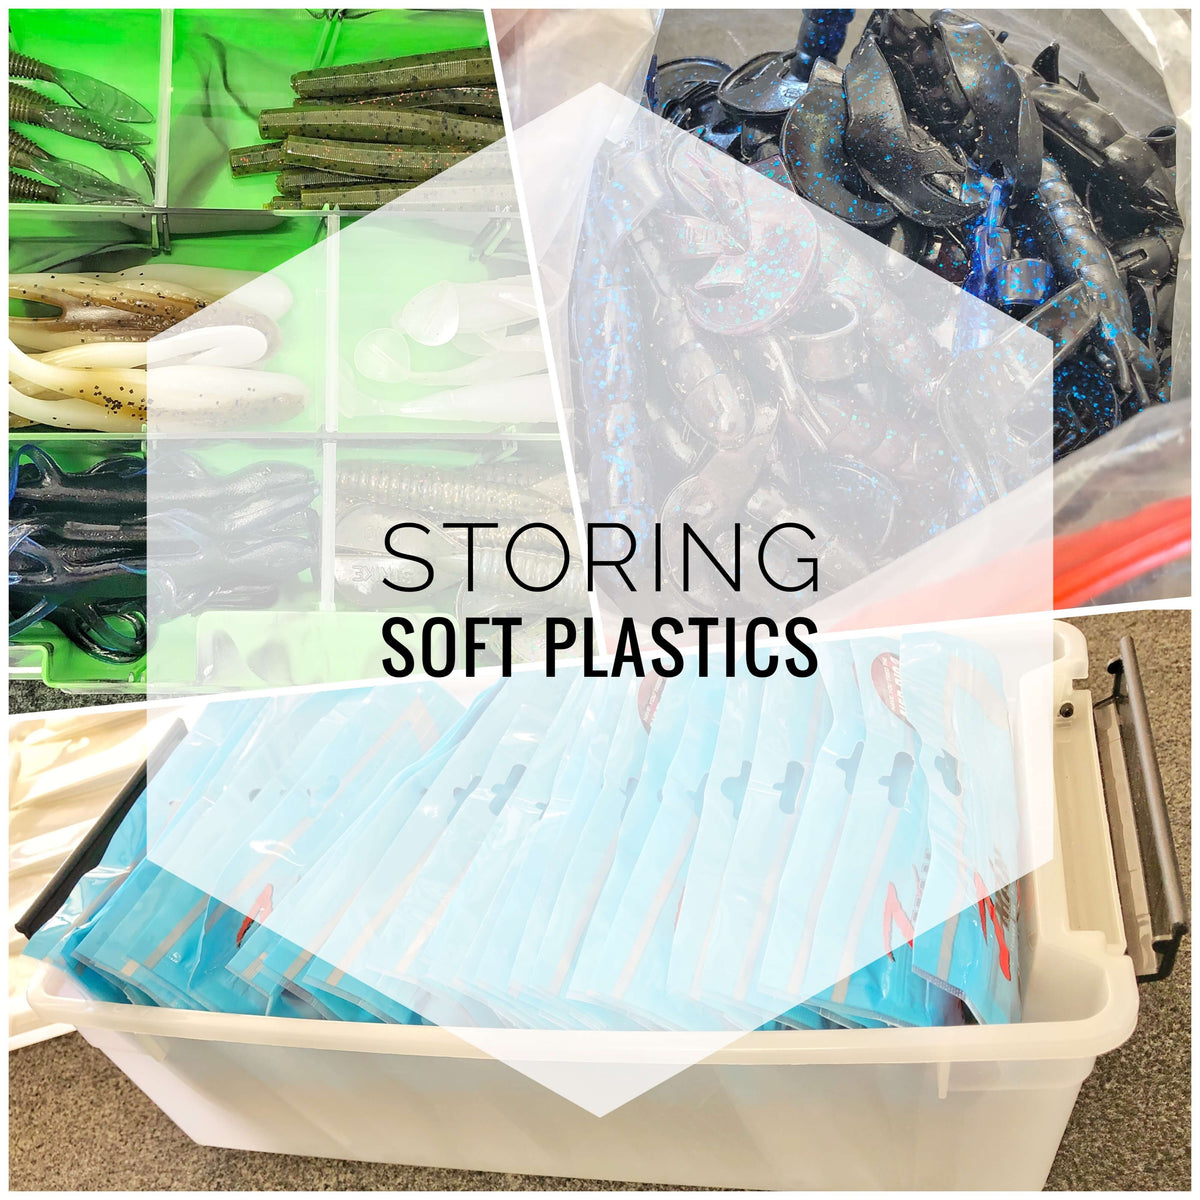 Efficient Soft Plastics Organization Solution